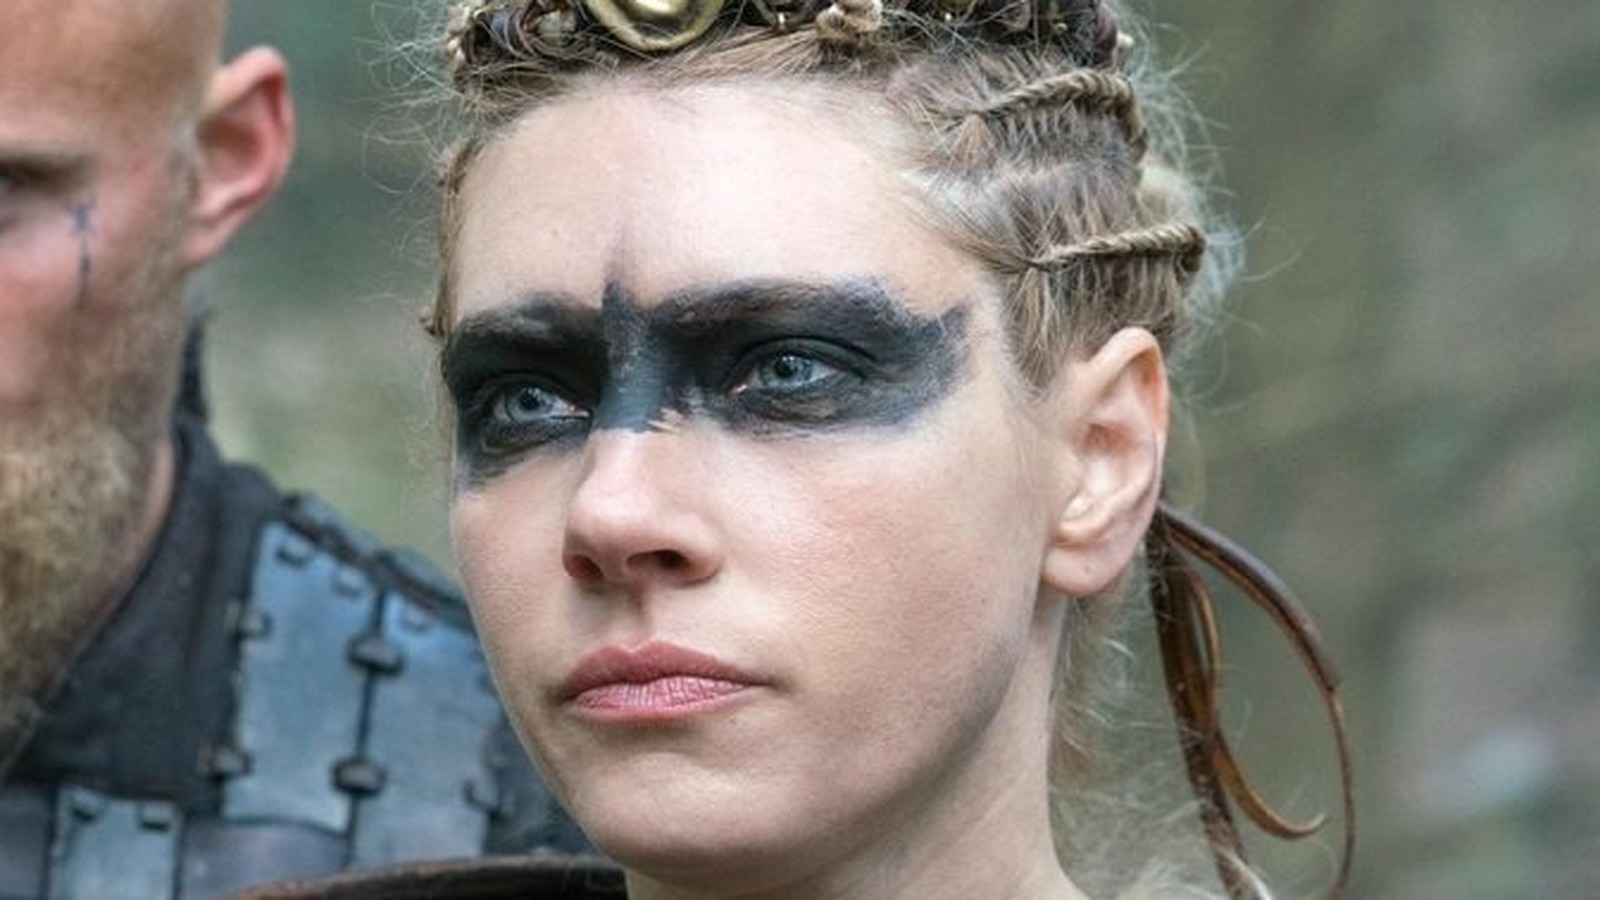 Viking Warrior Women: Did 'Shieldmaidens' Like Lagertha Really Exist?